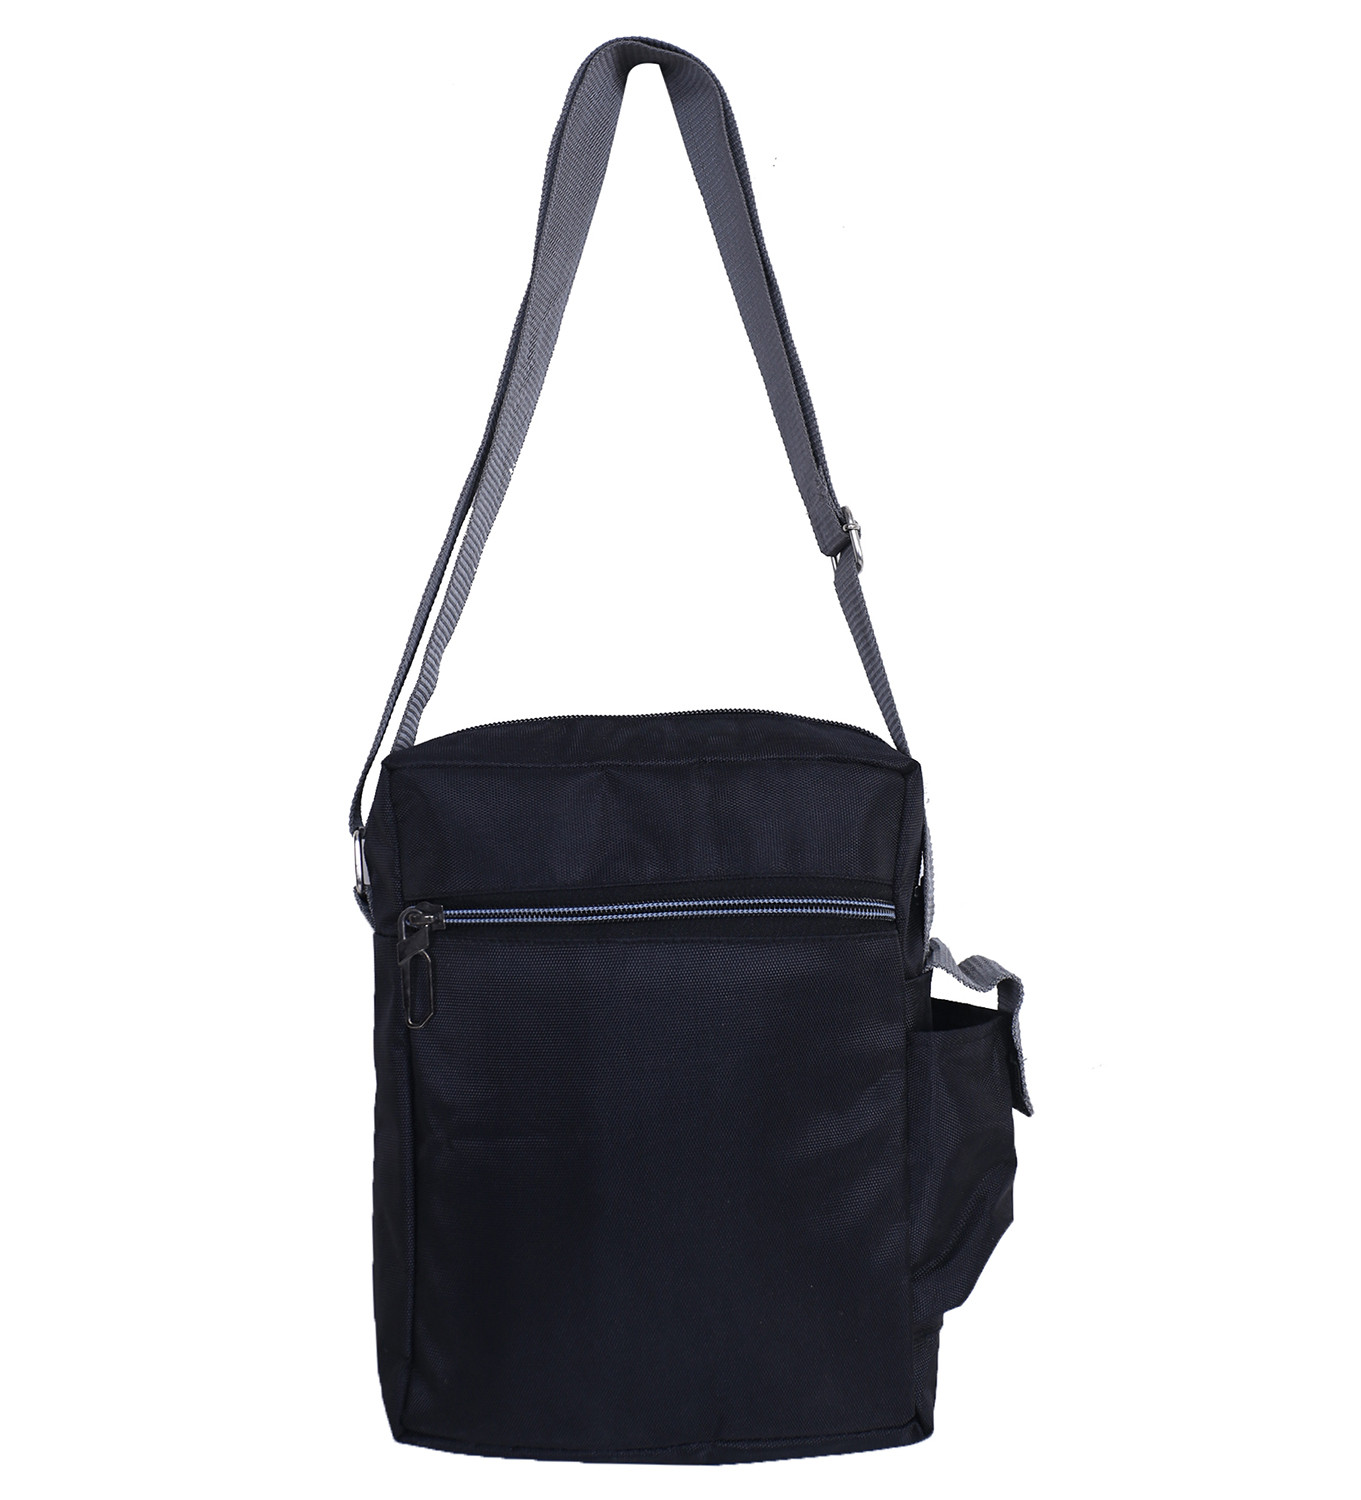 Kuber Industries Rexine Waterproof Crossbody Travel Office Messenger Bag | Sling Bag For Men & Women (Black)